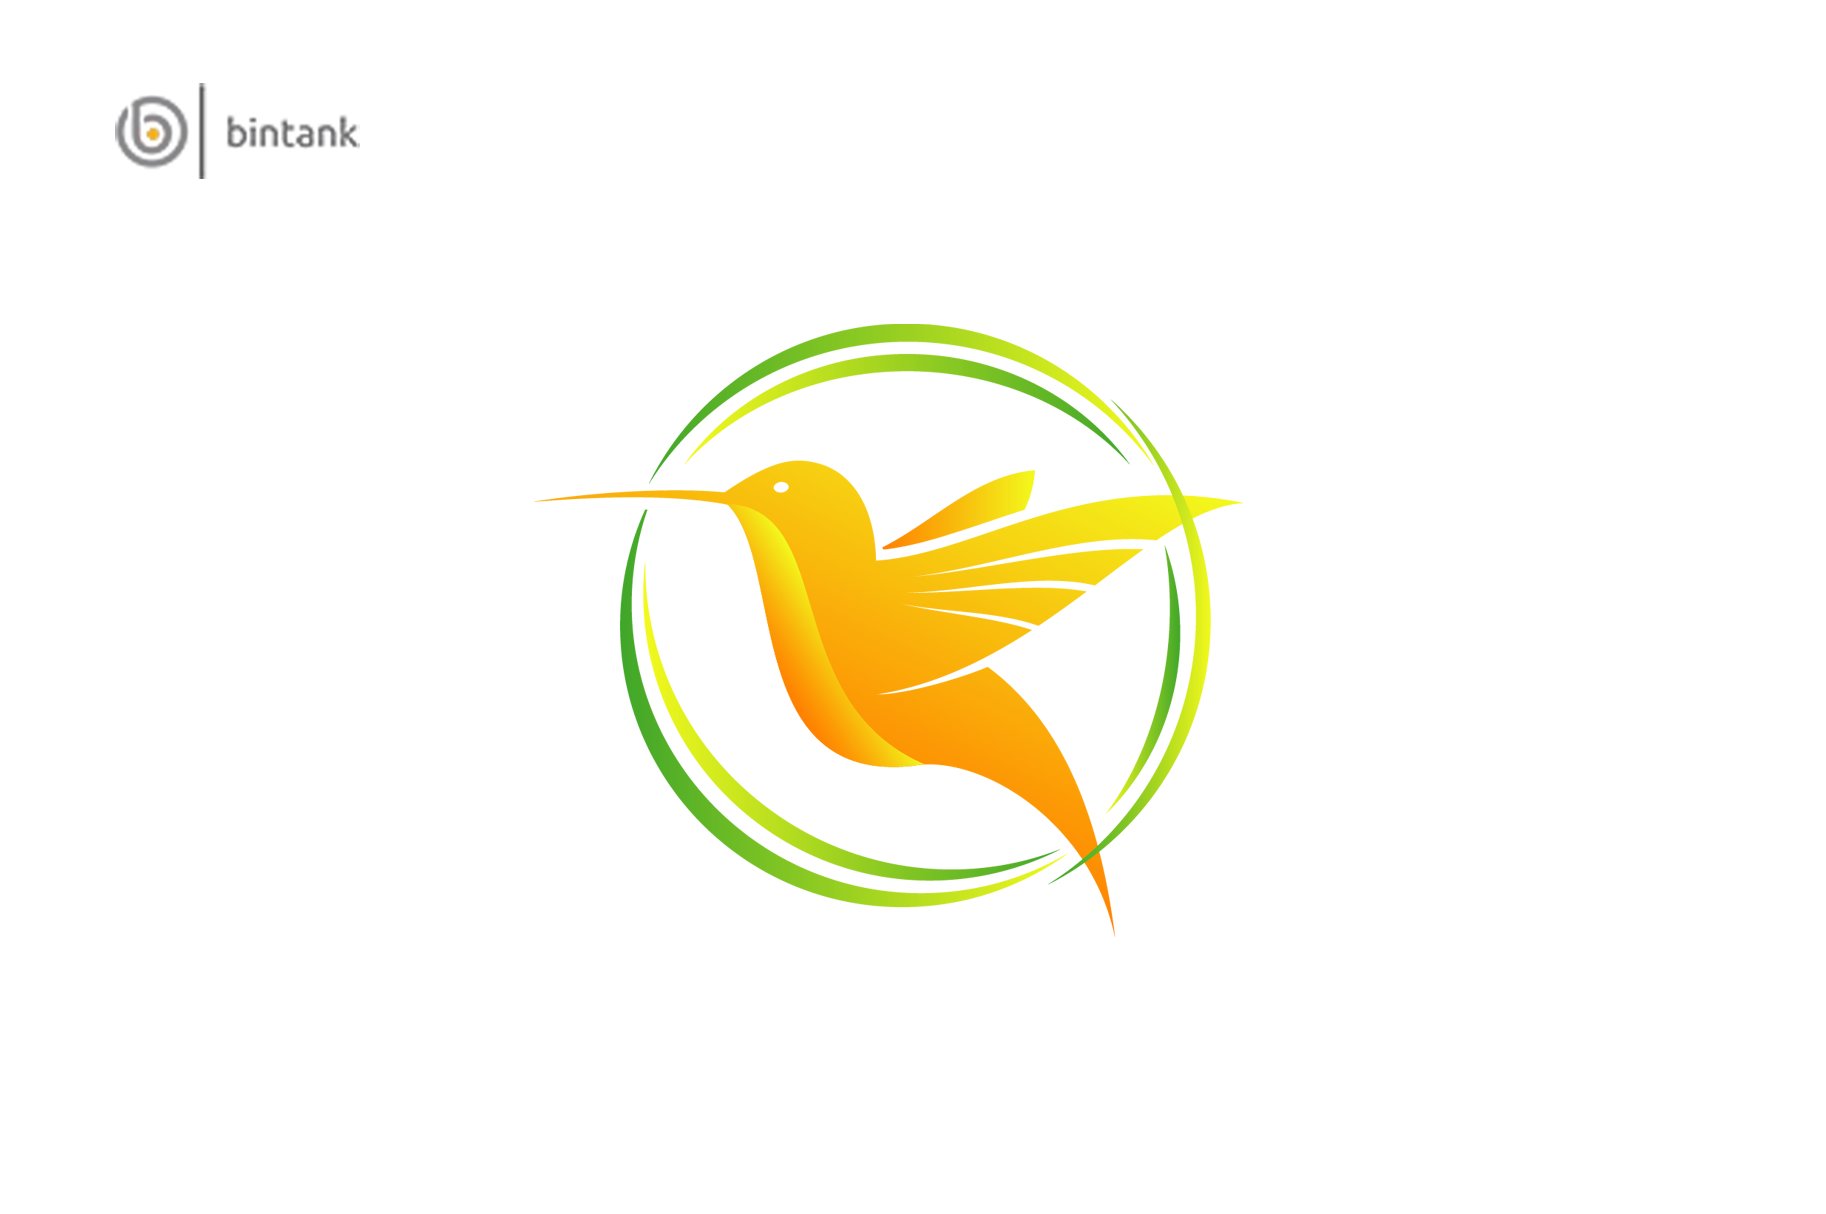 Beautiful Humming Bird Logo cover image.